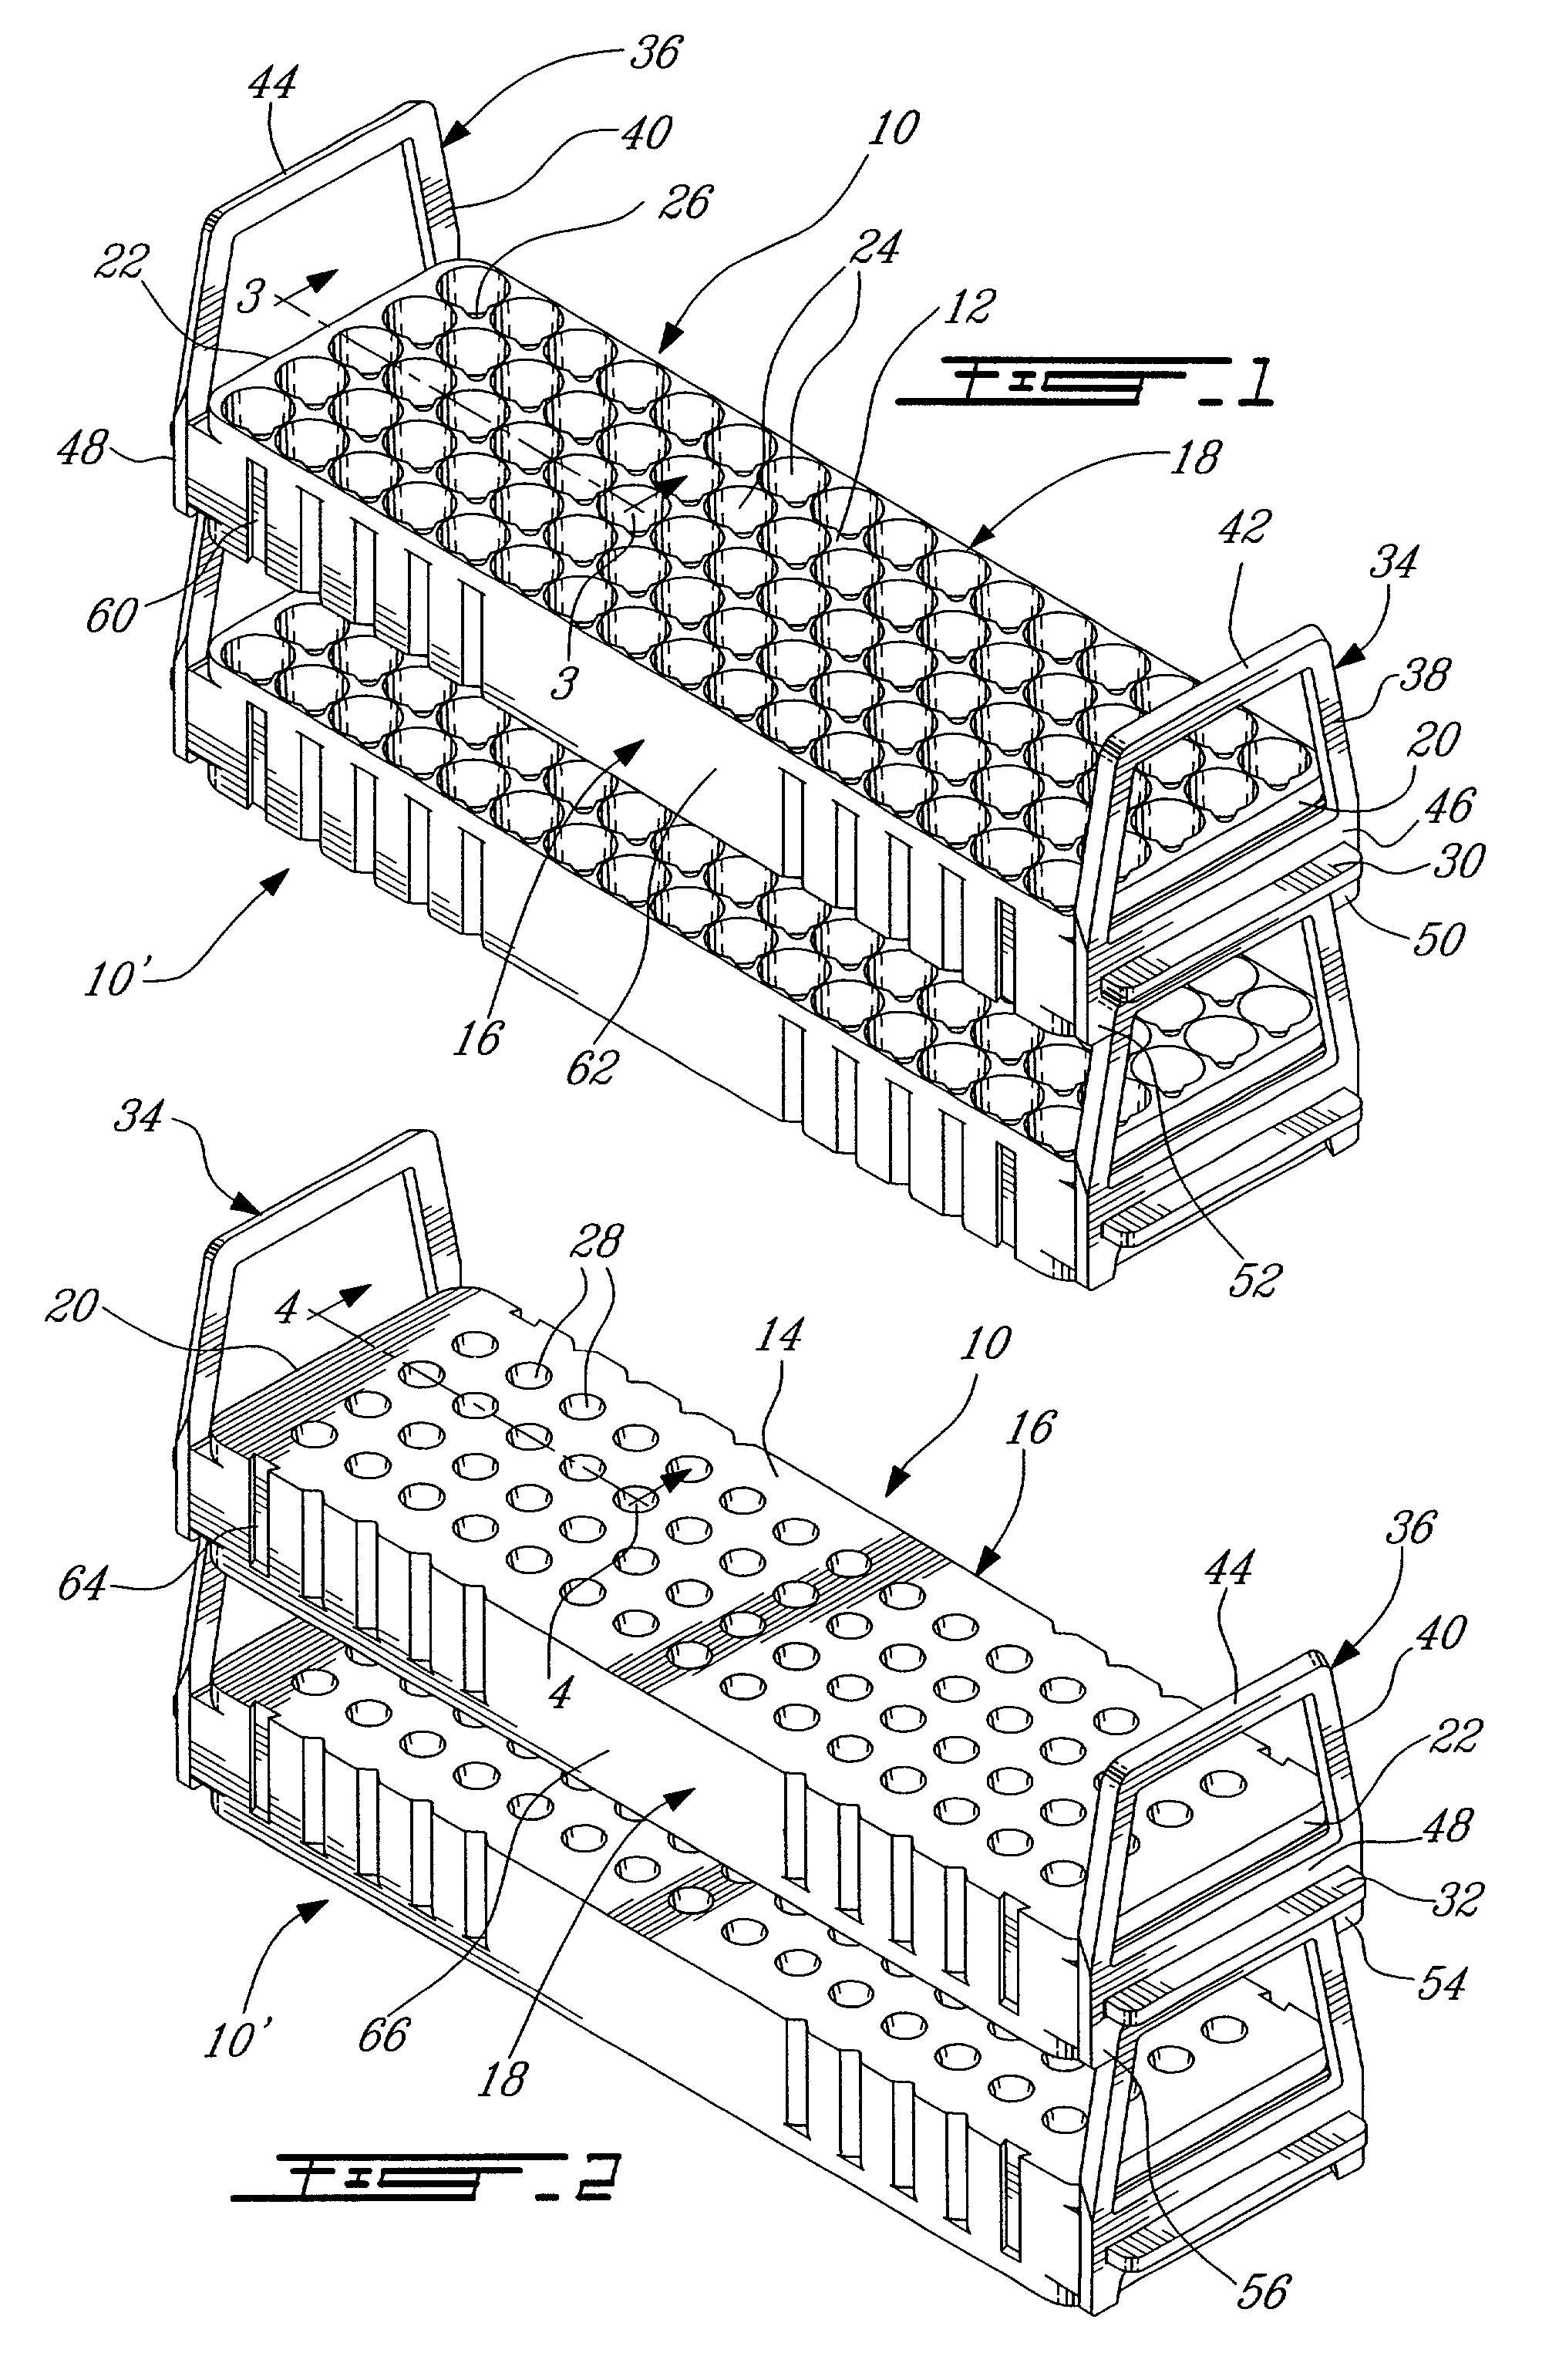 Modular test tube rack